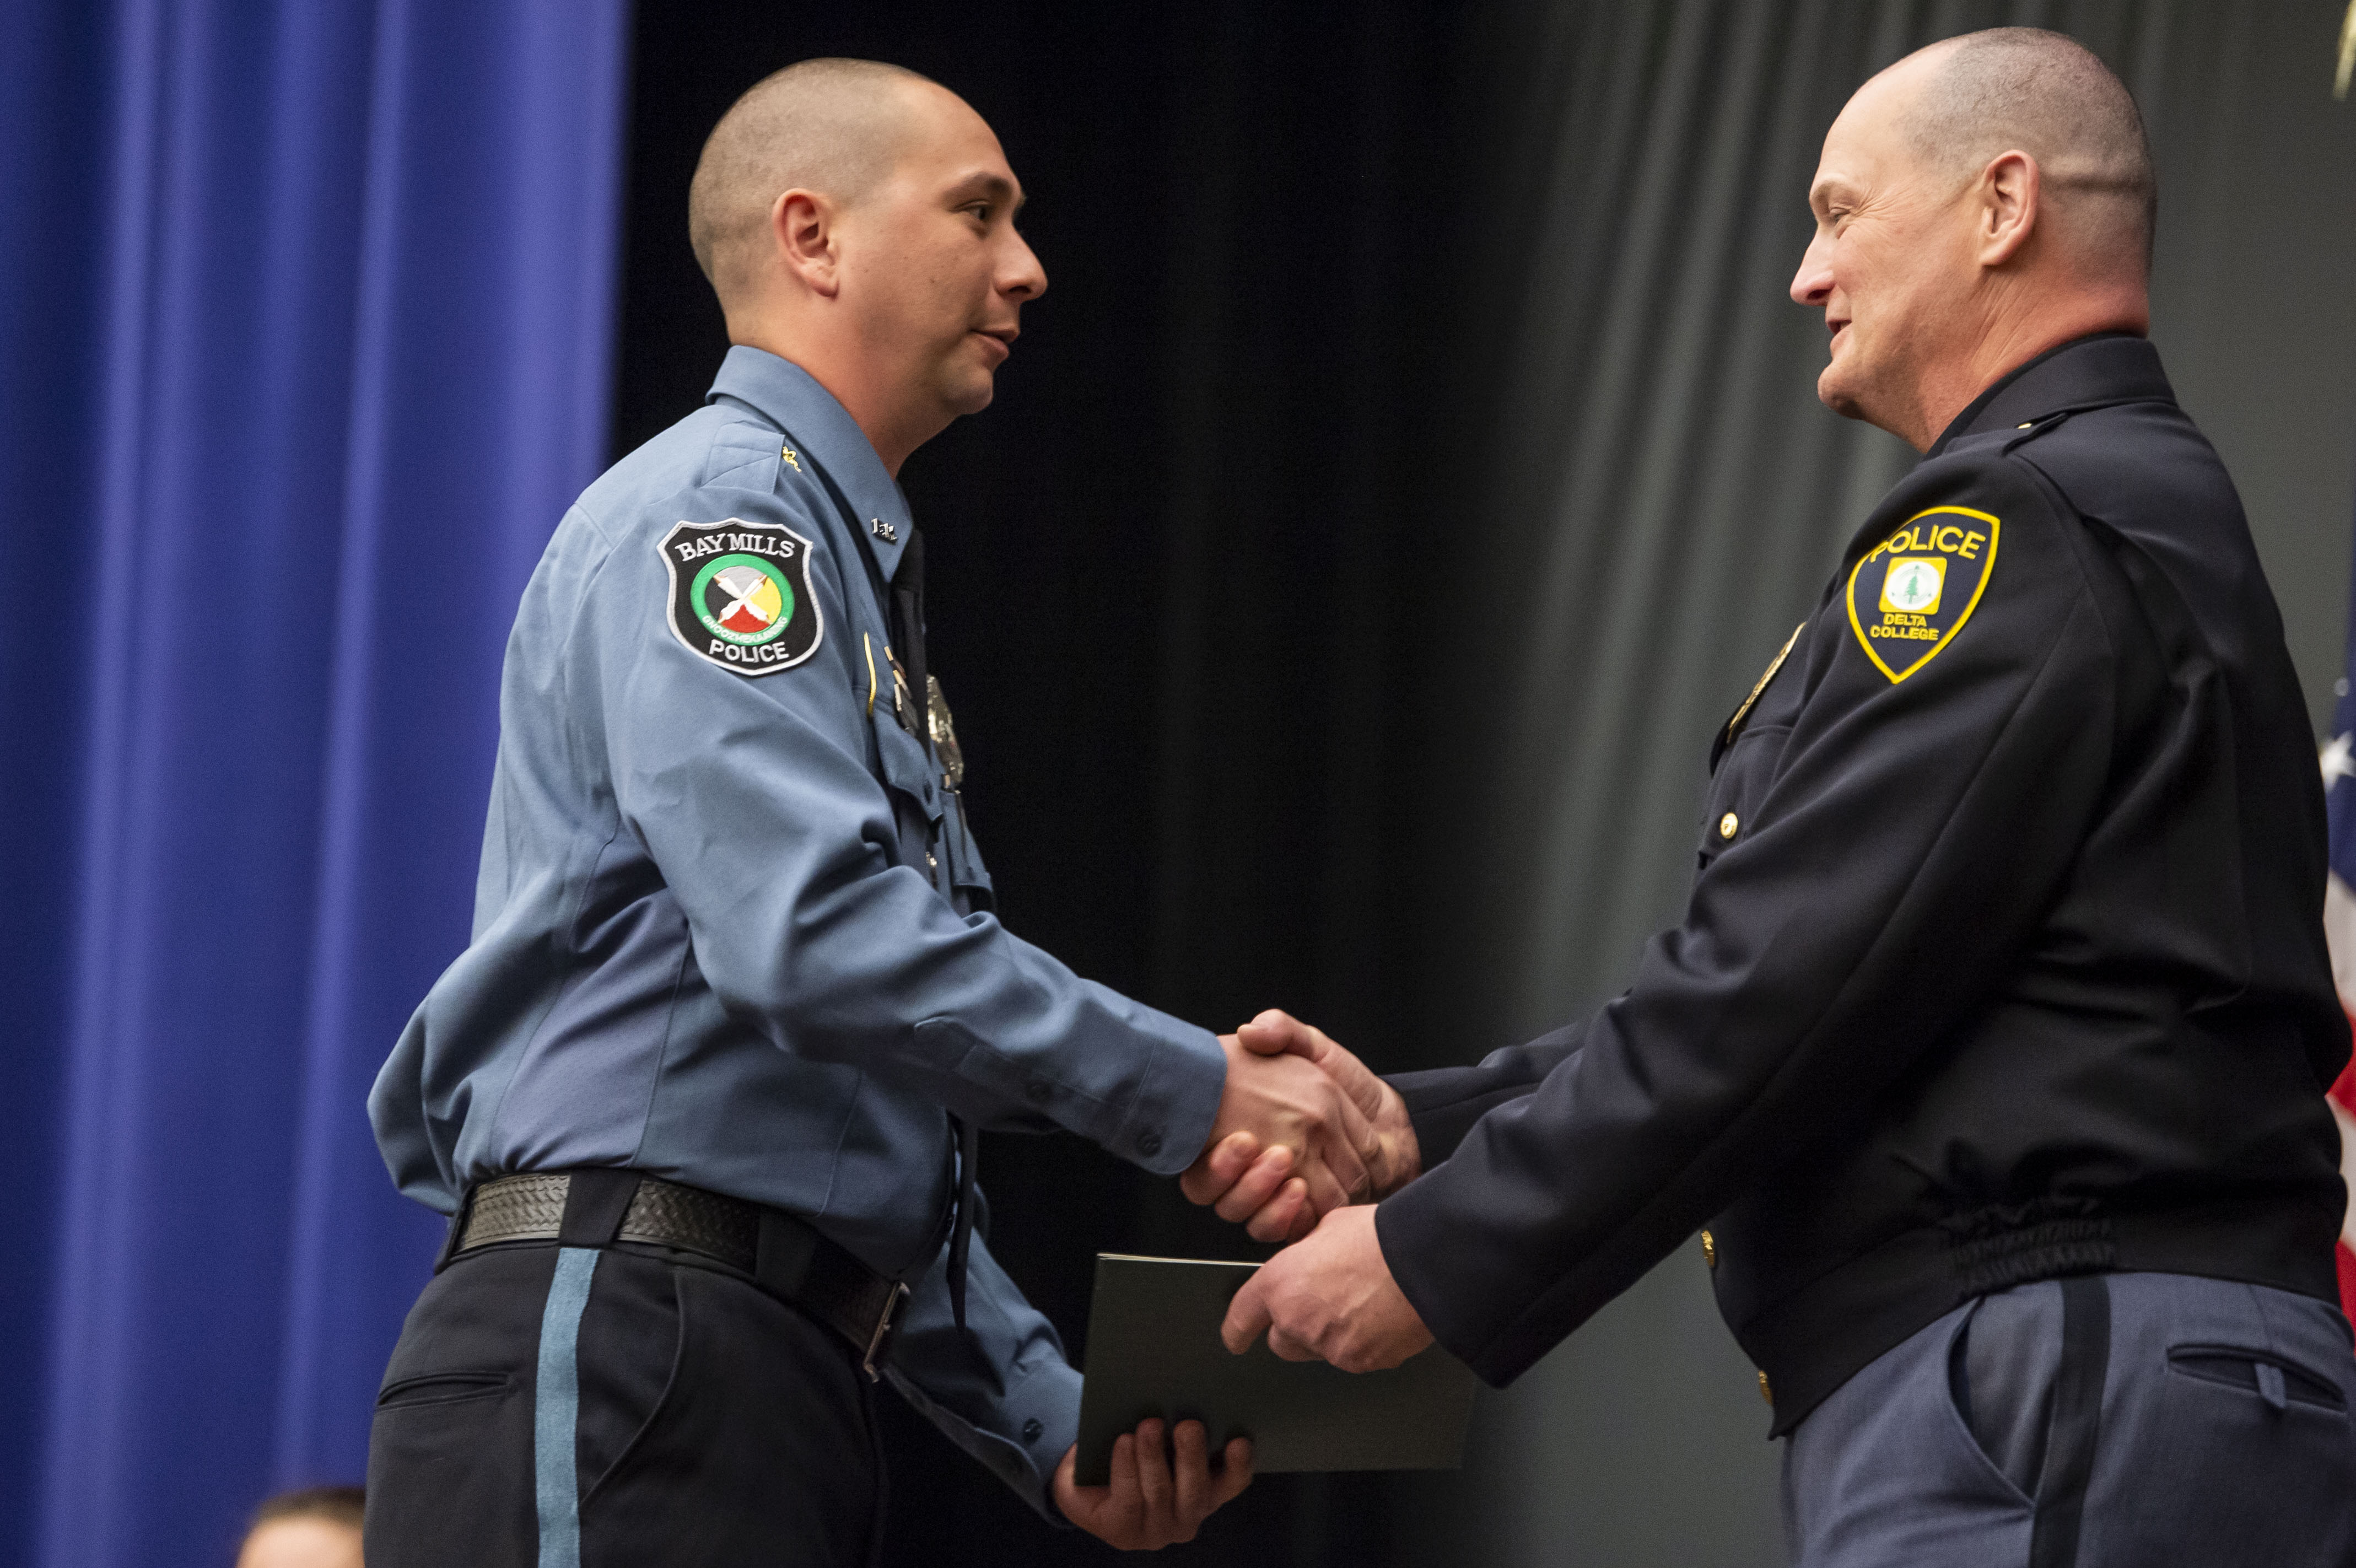 Police Academy - Certificate of Achievement - Delta College